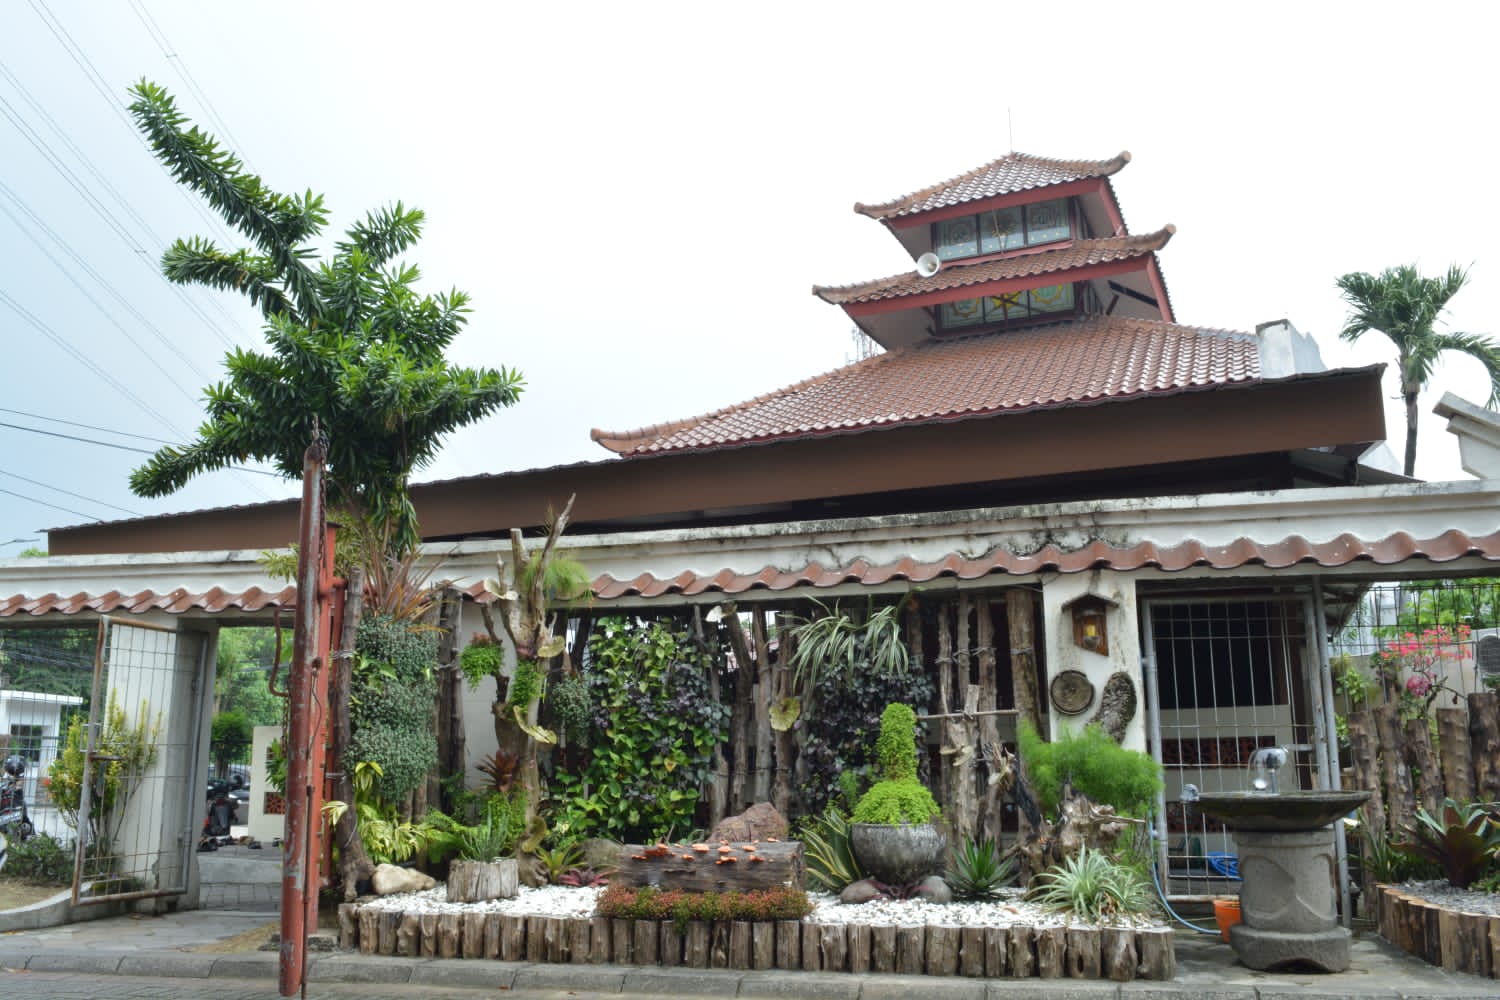 Serial Geliat Masjid Perumahan (Seri 22): Masjid Bukit Mas, Surabaya; Bergaya Jepang Sesuaikan Cluster Perumahan